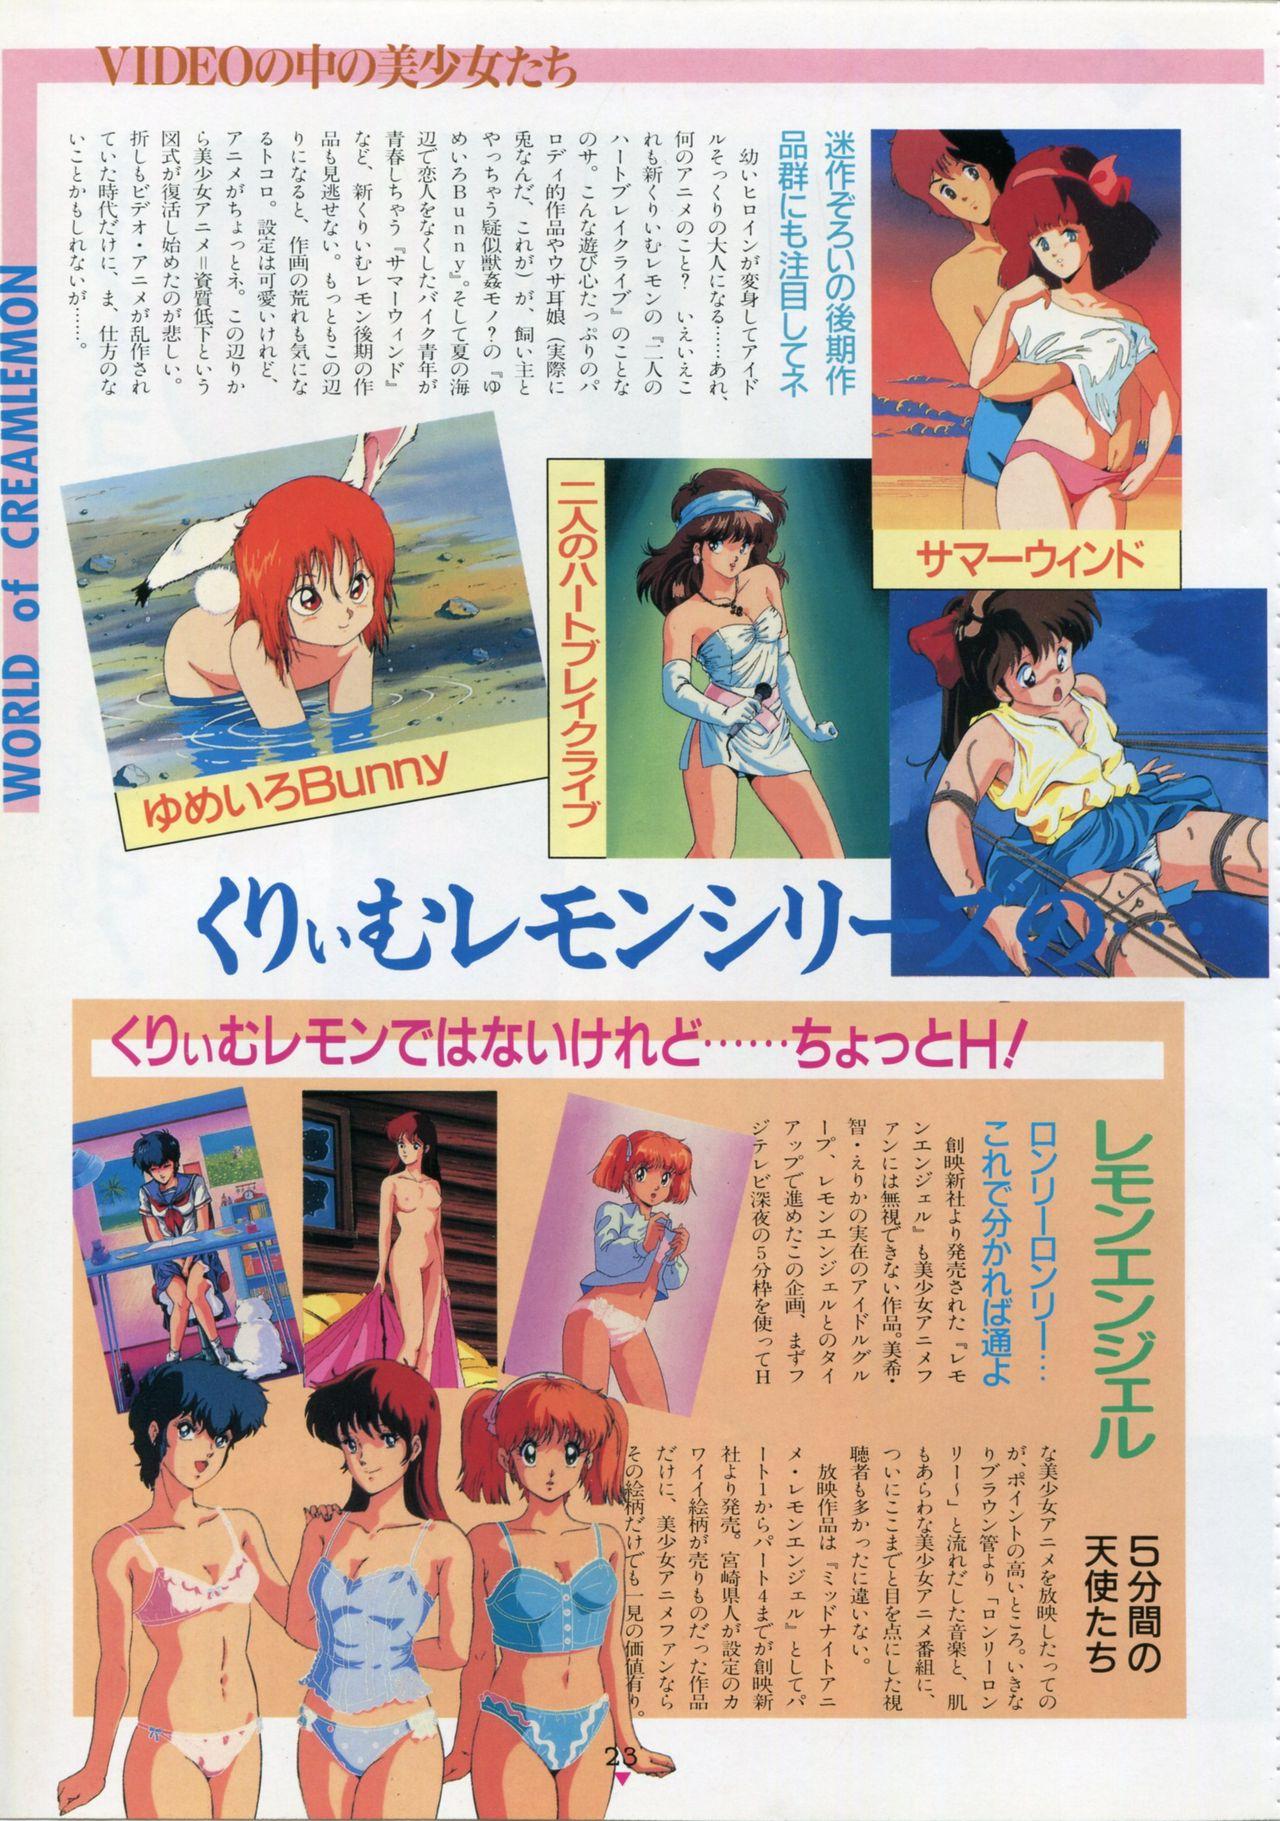 Bishoujo Anime Daizenshuu - Adult Animation Video Catalog 1991 18